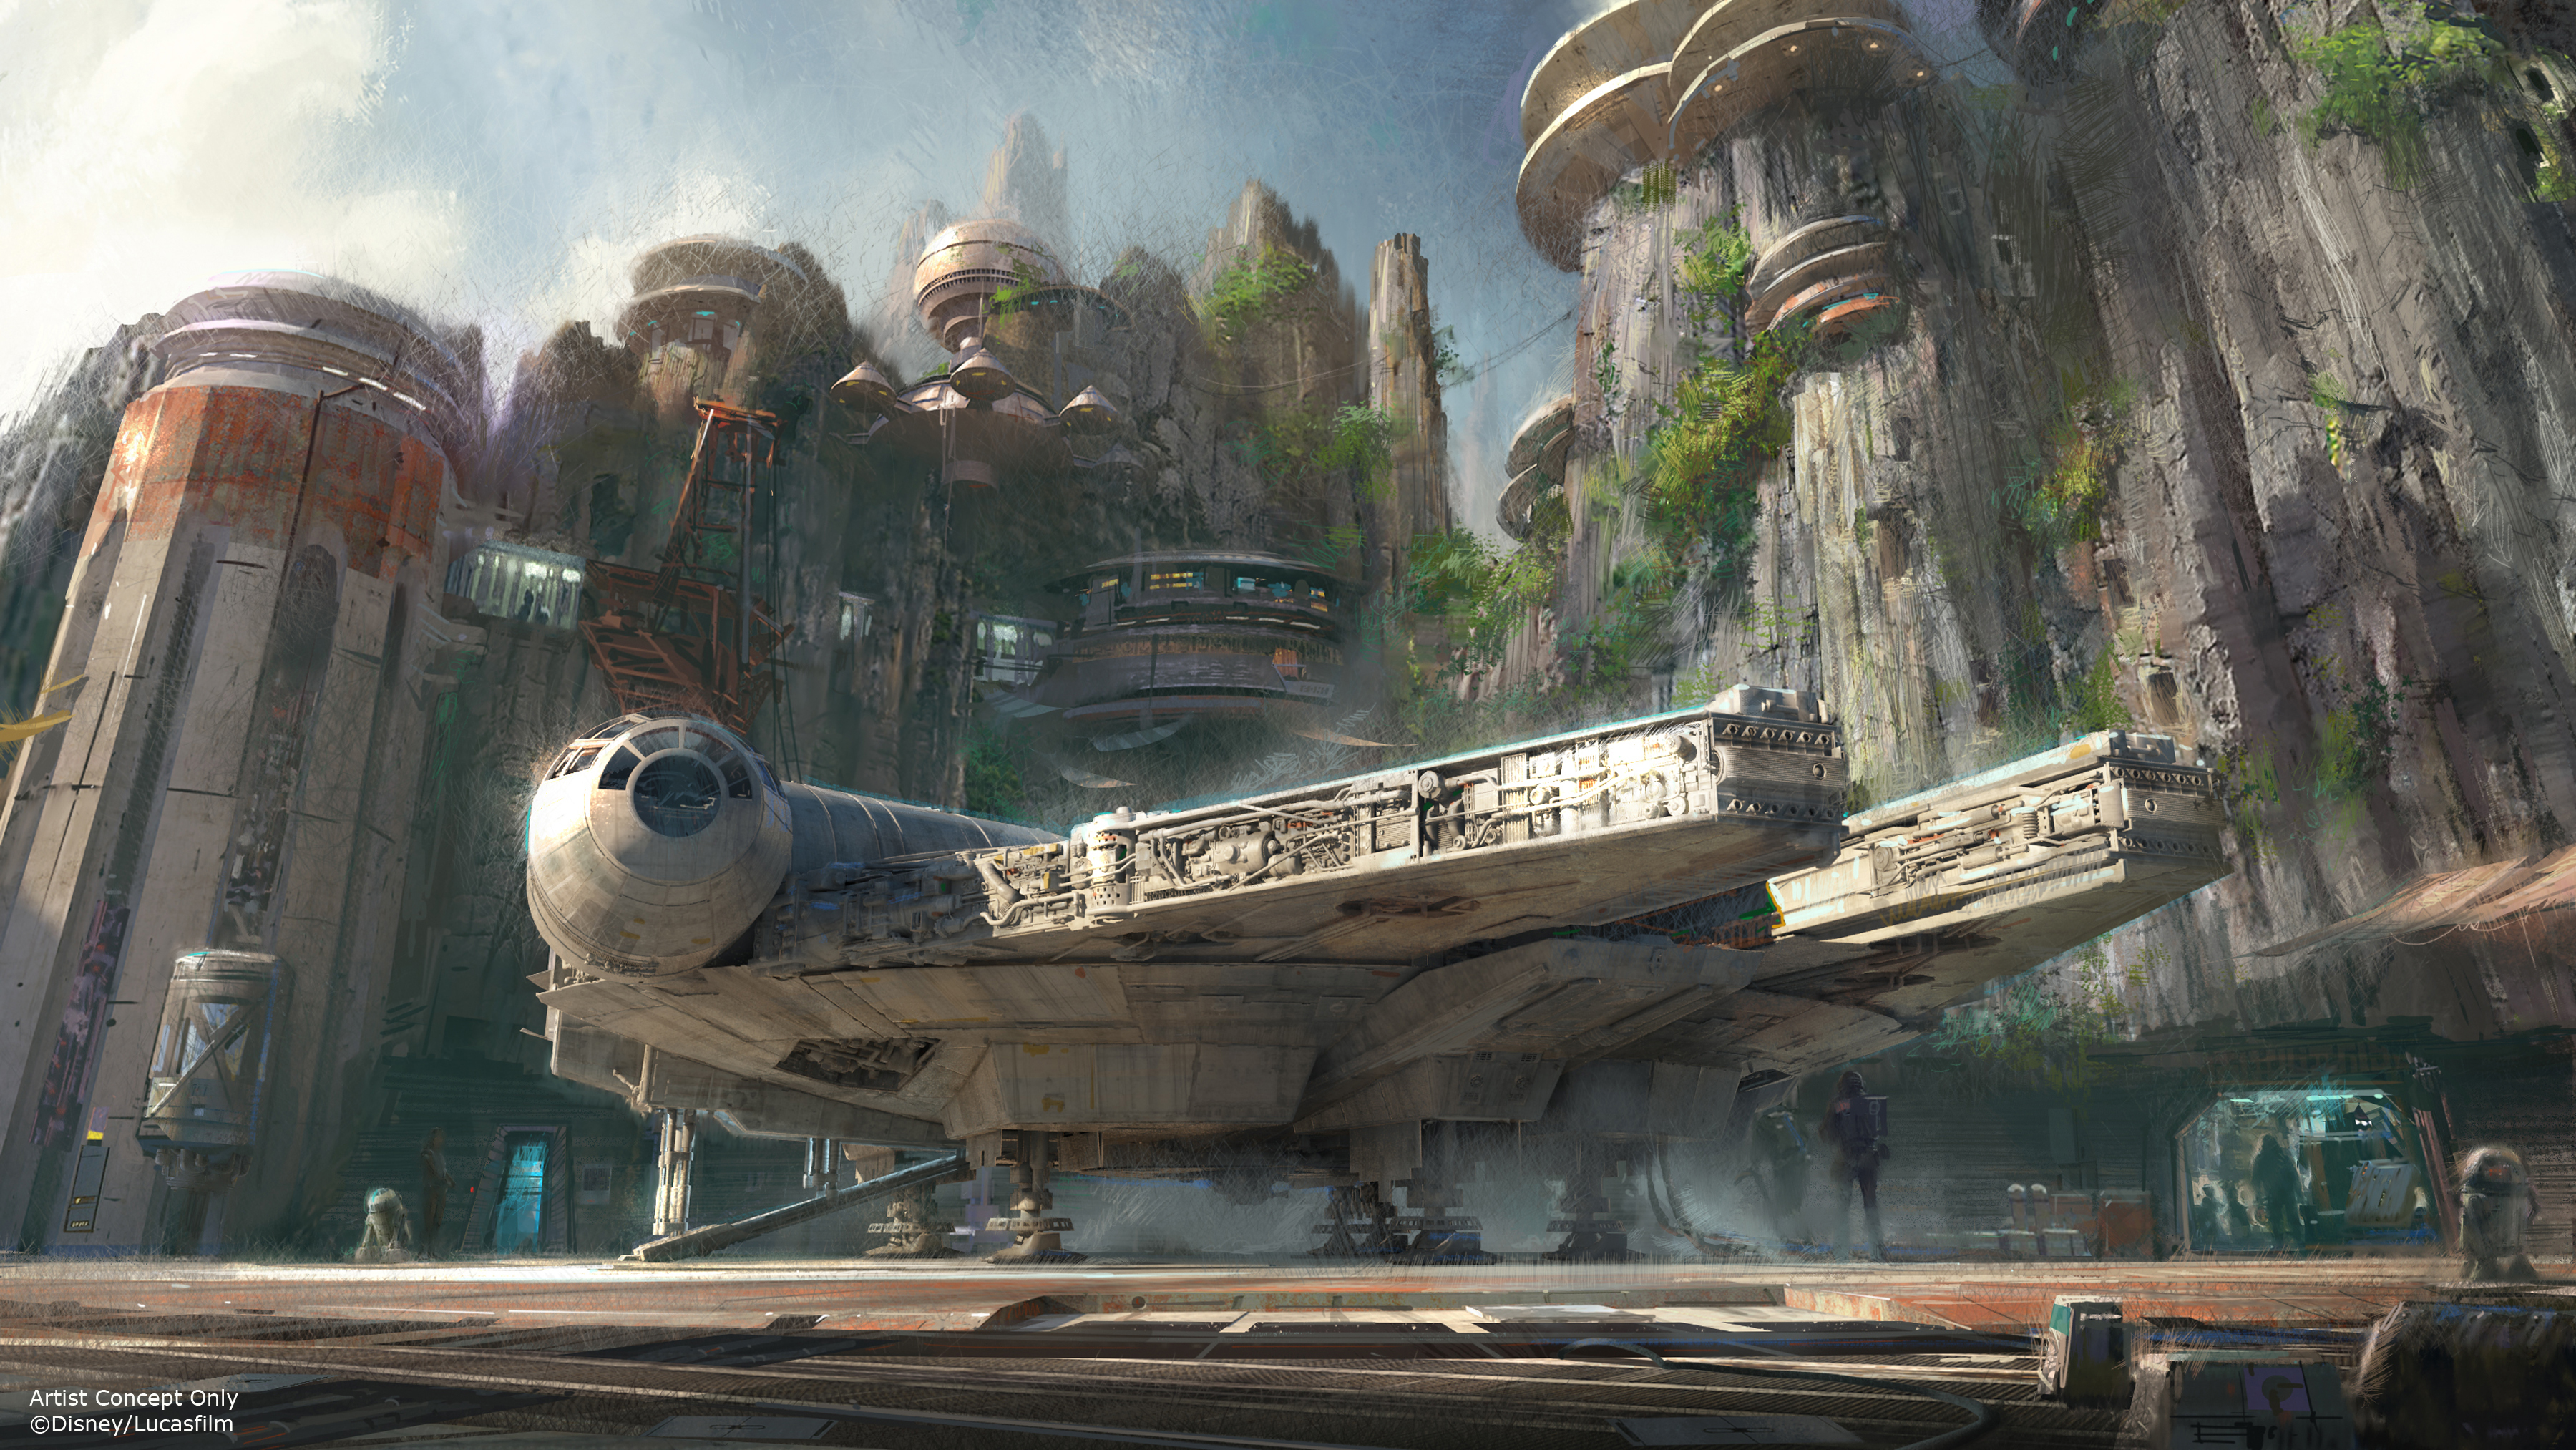 Disney Announces Star Wars Land for Disneyland and Walt Disney World Resorts [Updated]